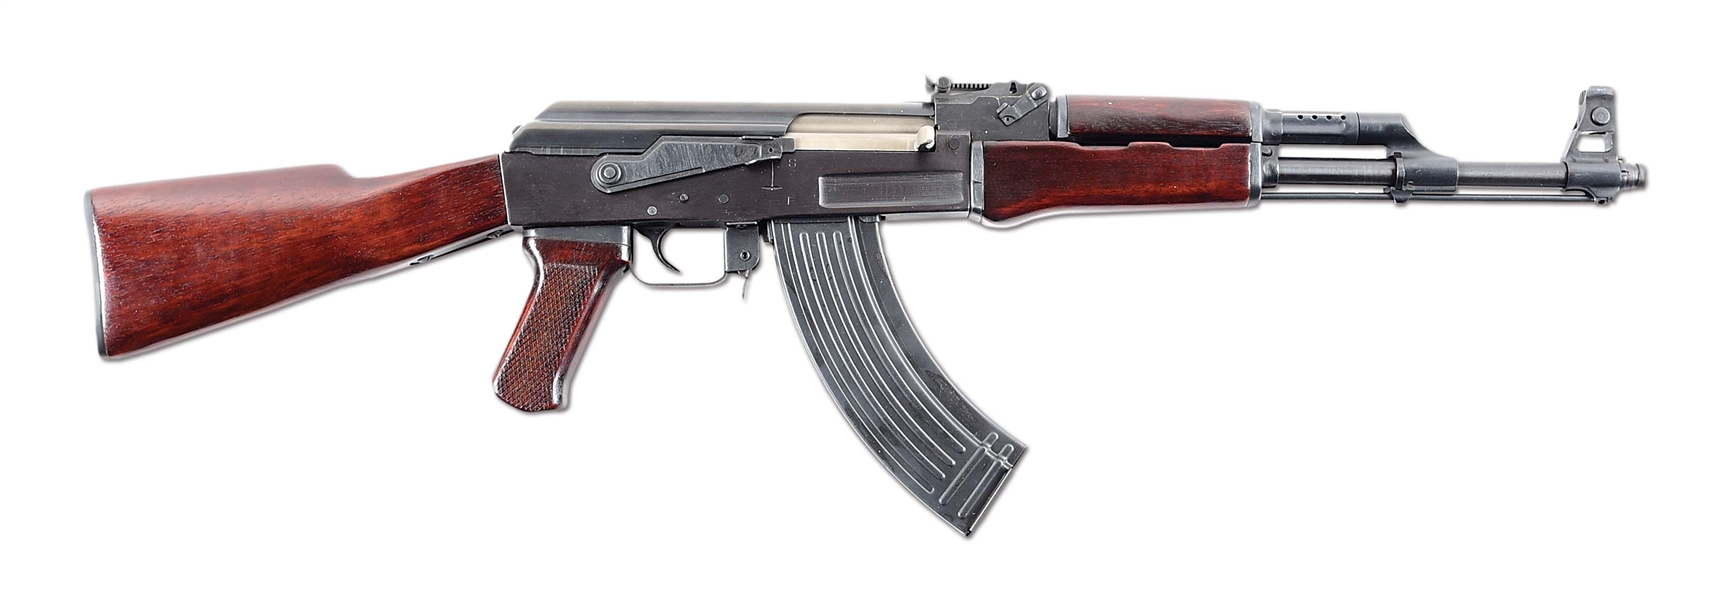 (M) PHENOMENAL & SOUGHT AFTER PRE-BAN POLYTECH LEGEND SERIES AK-47/S SEMI-AUTOMATIC RIFLE WITH BOX & ACCESSORIES.